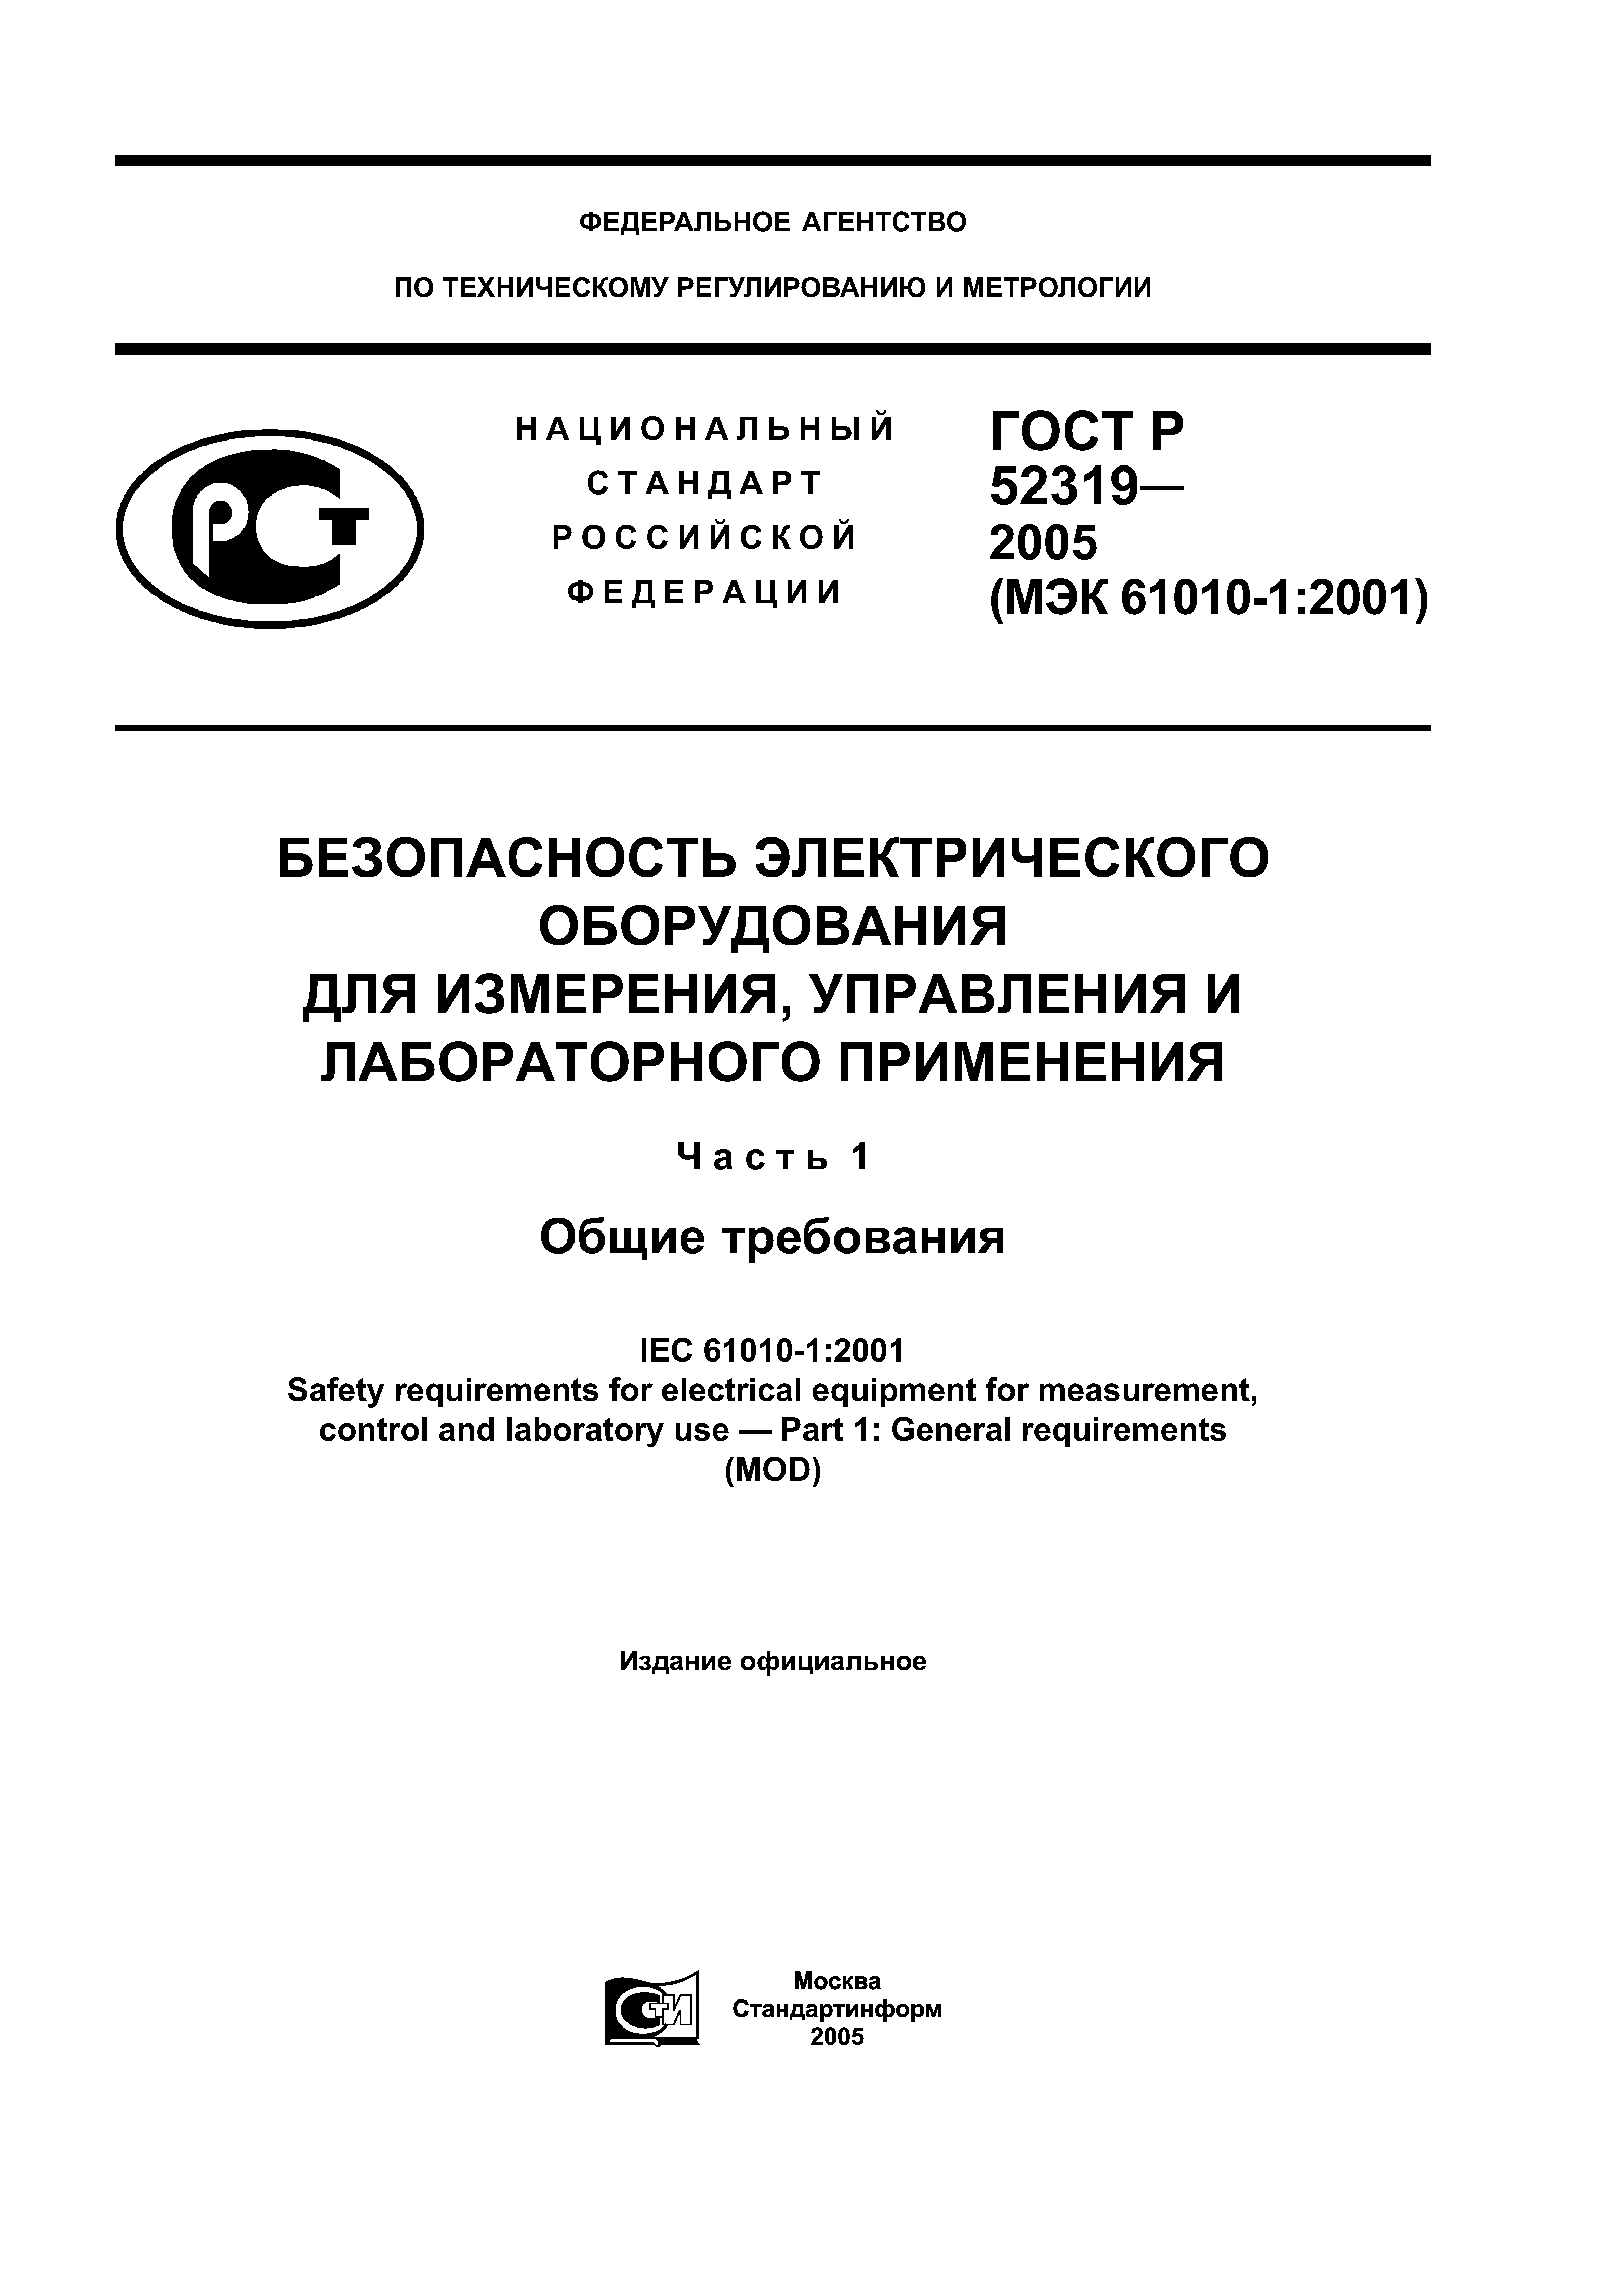 ГОСТ Р 52319-2005